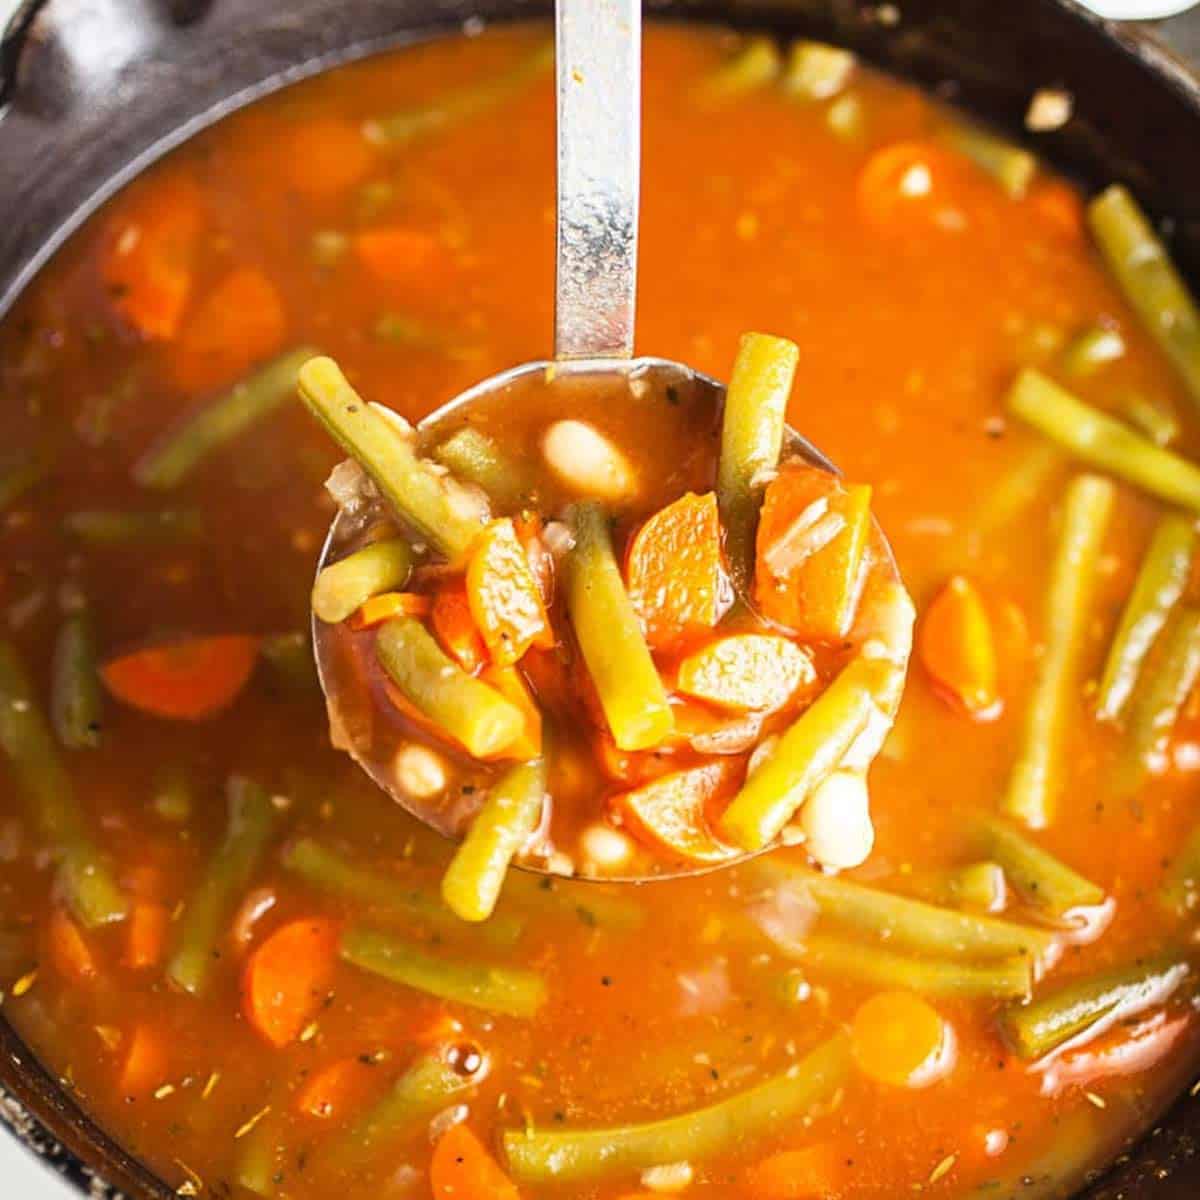 Ladle-full of Italian vegetable soup in the pot